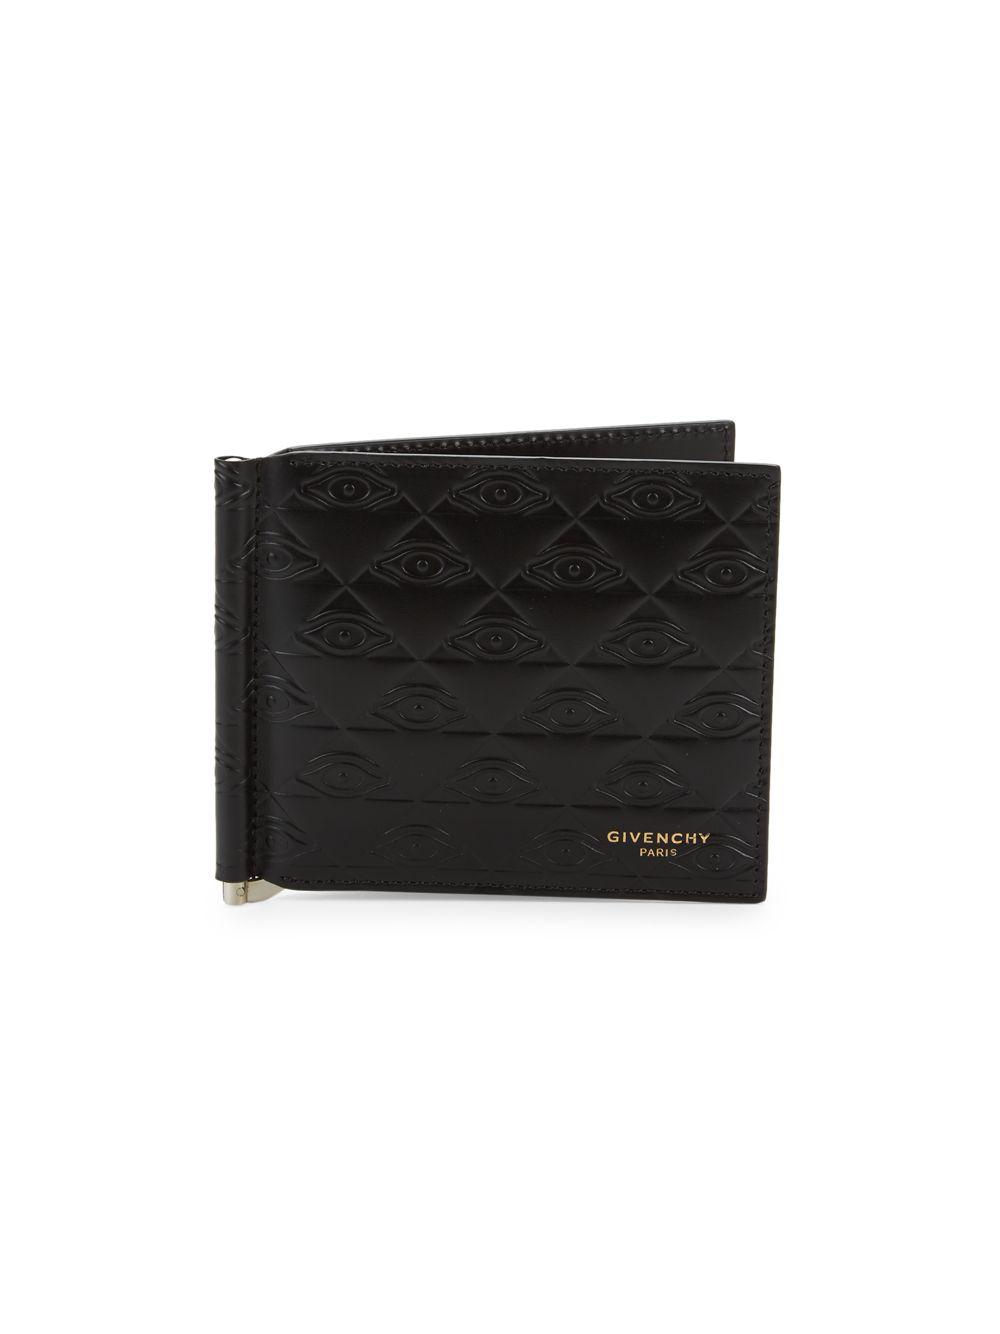 Givenchy Embossed Leather Bi-fold Wallet in Black for Men - Lyst